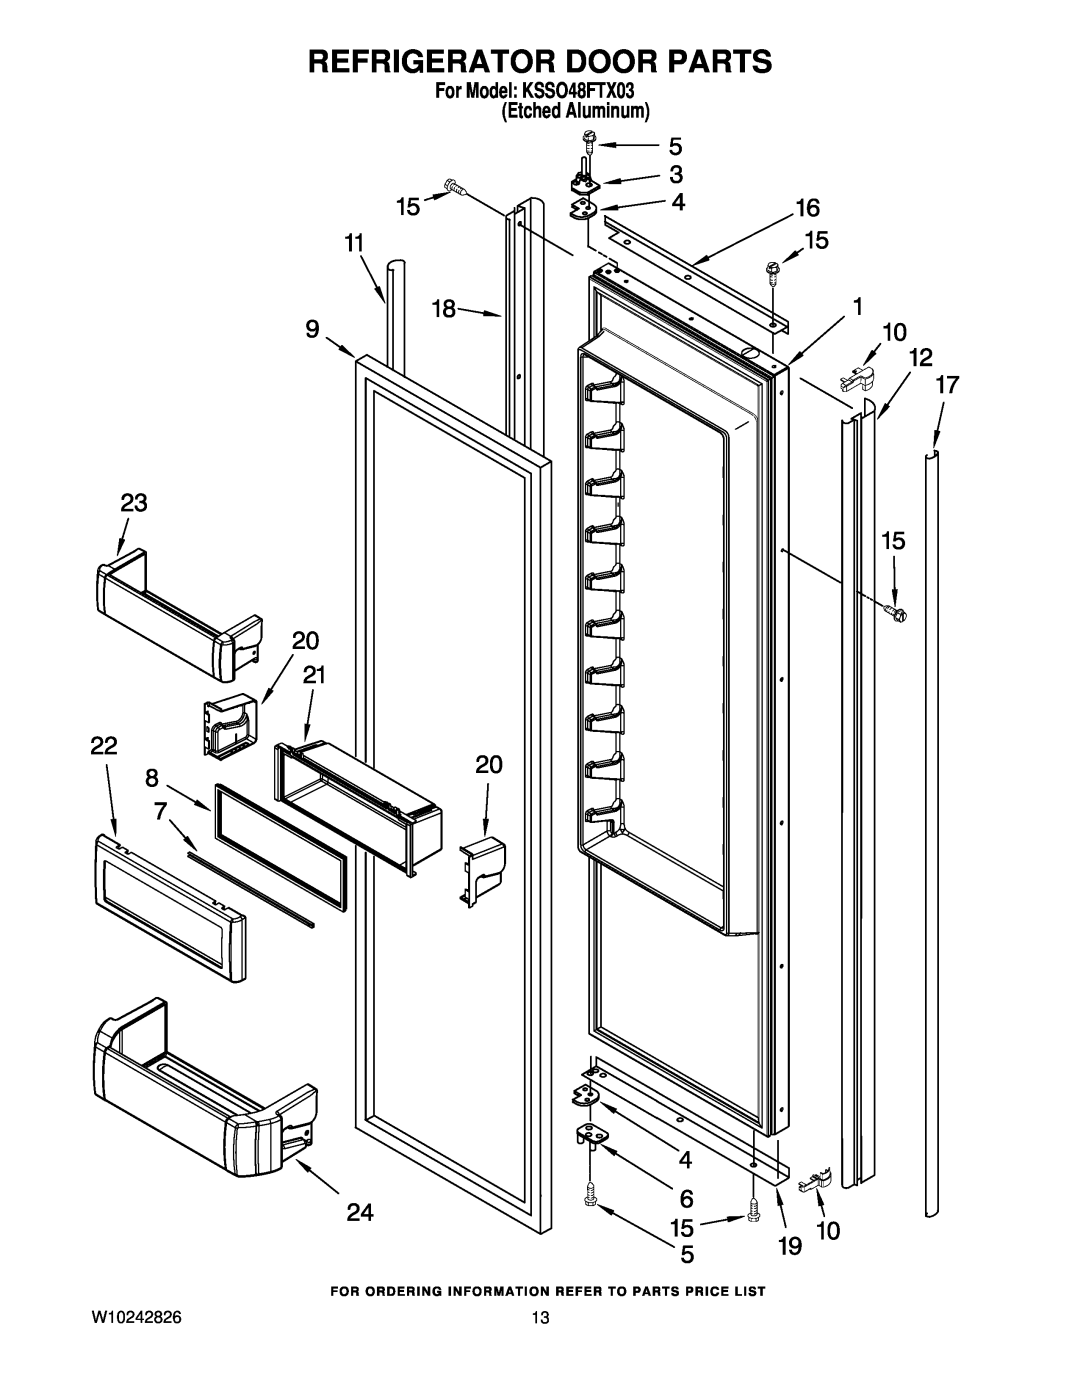 KitchenAid manual Refrigerator Door Parts, W10242826, For Model KSSO48FTX03 Etched Aluminum 